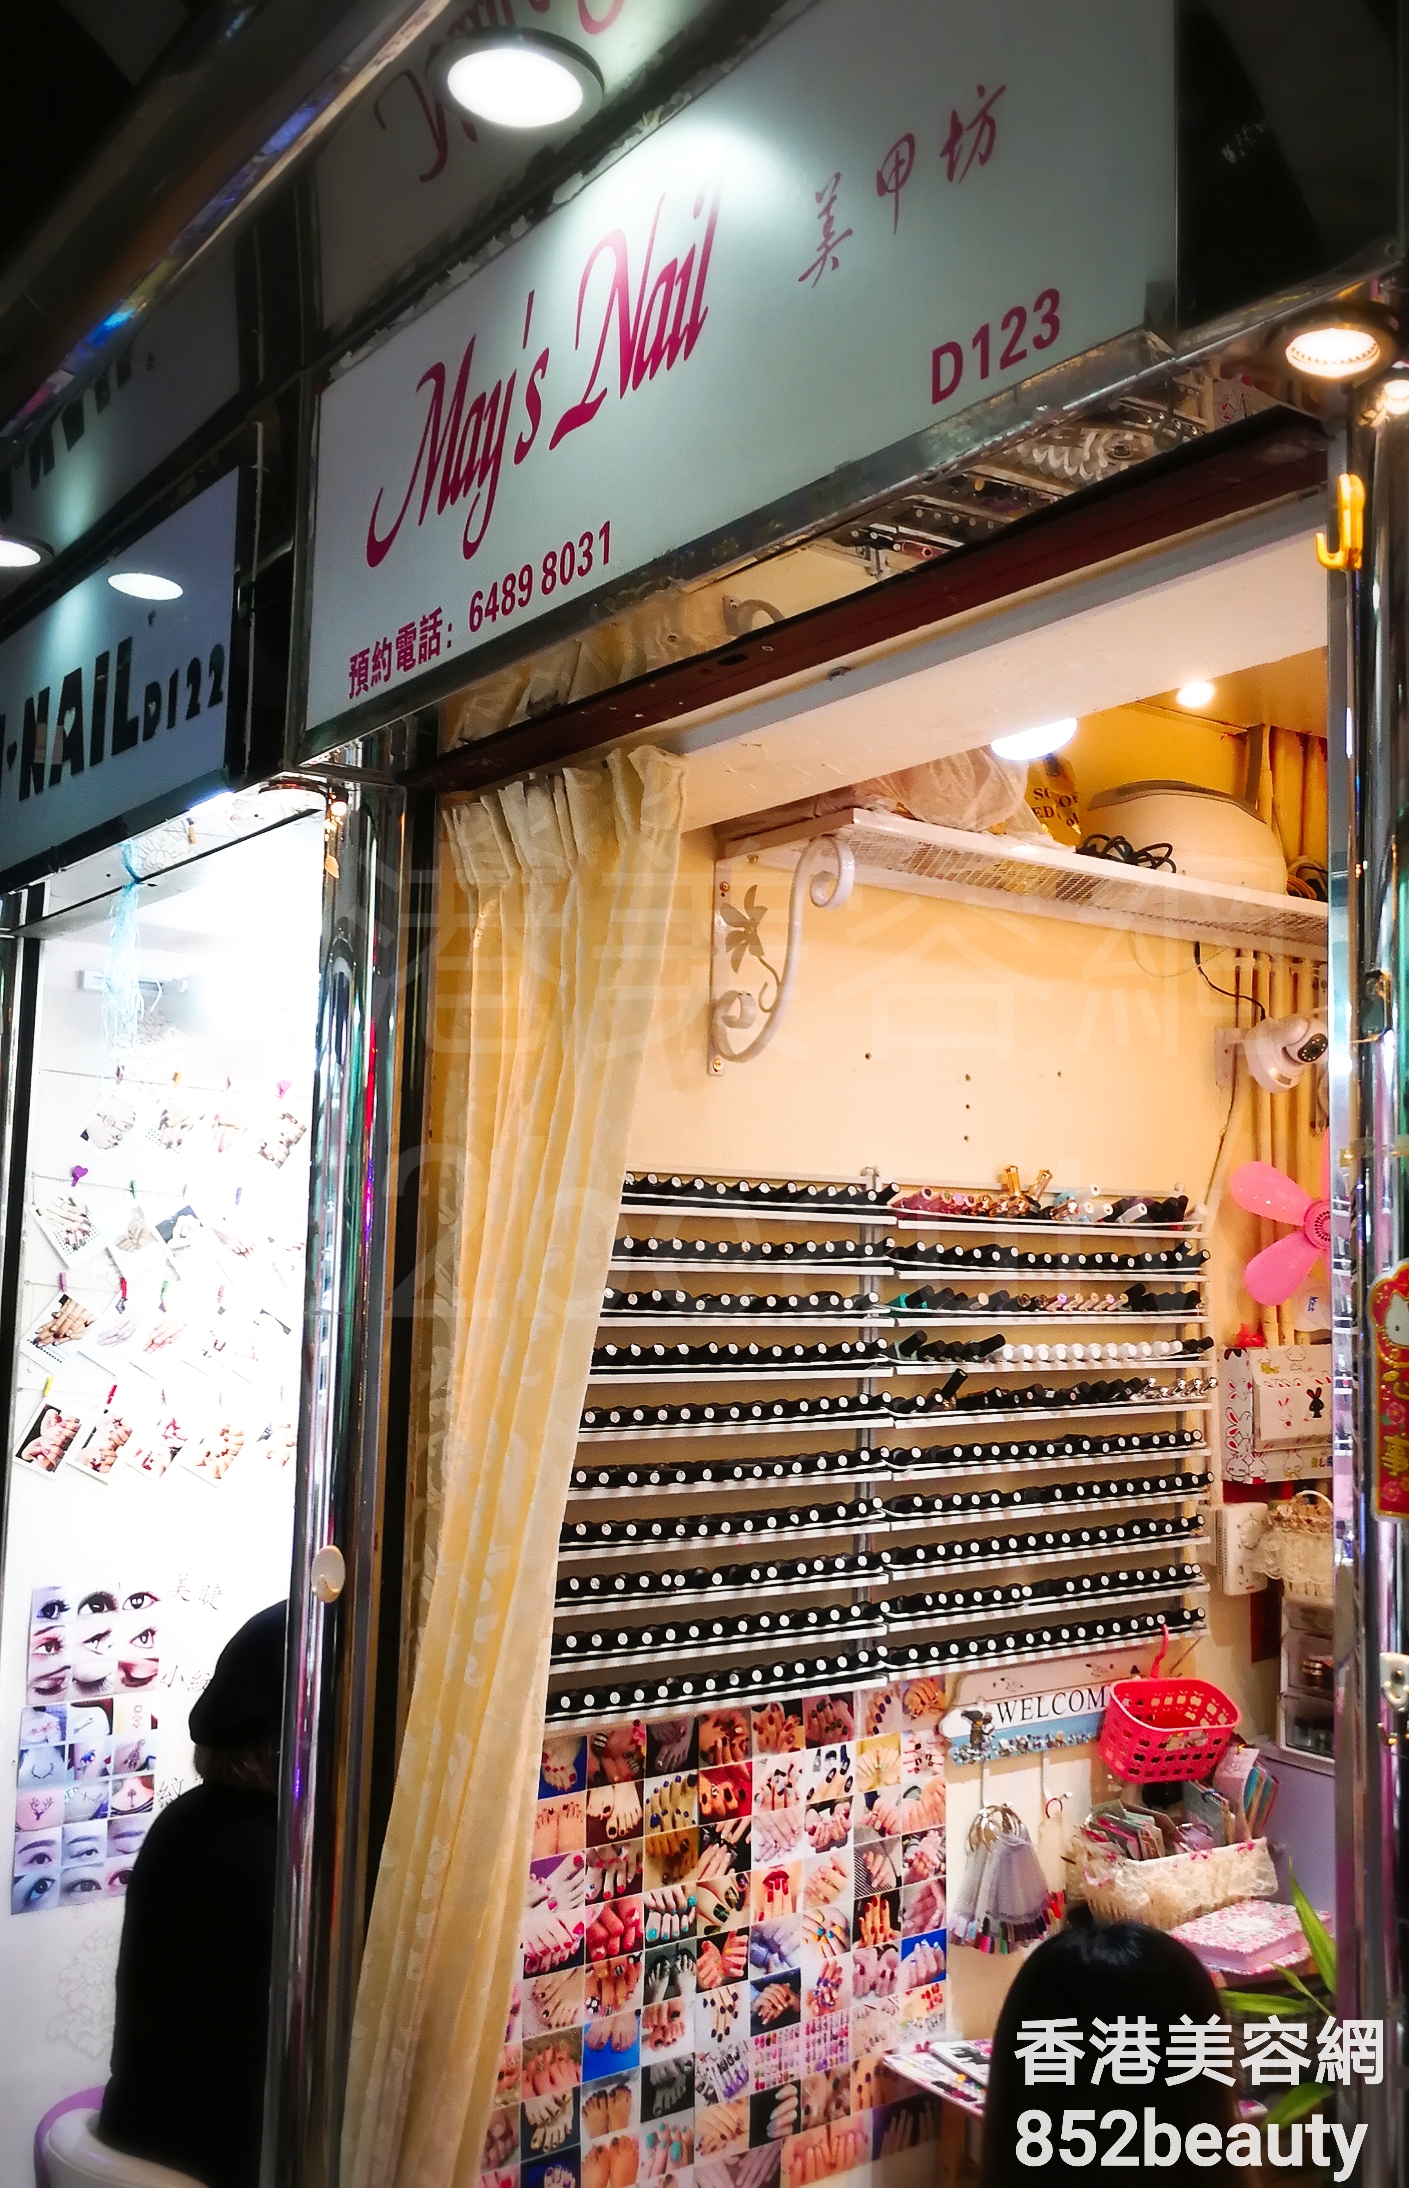 香港美容網 Hong Kong Beauty Salon 美容院 / 美容師: May's Nail